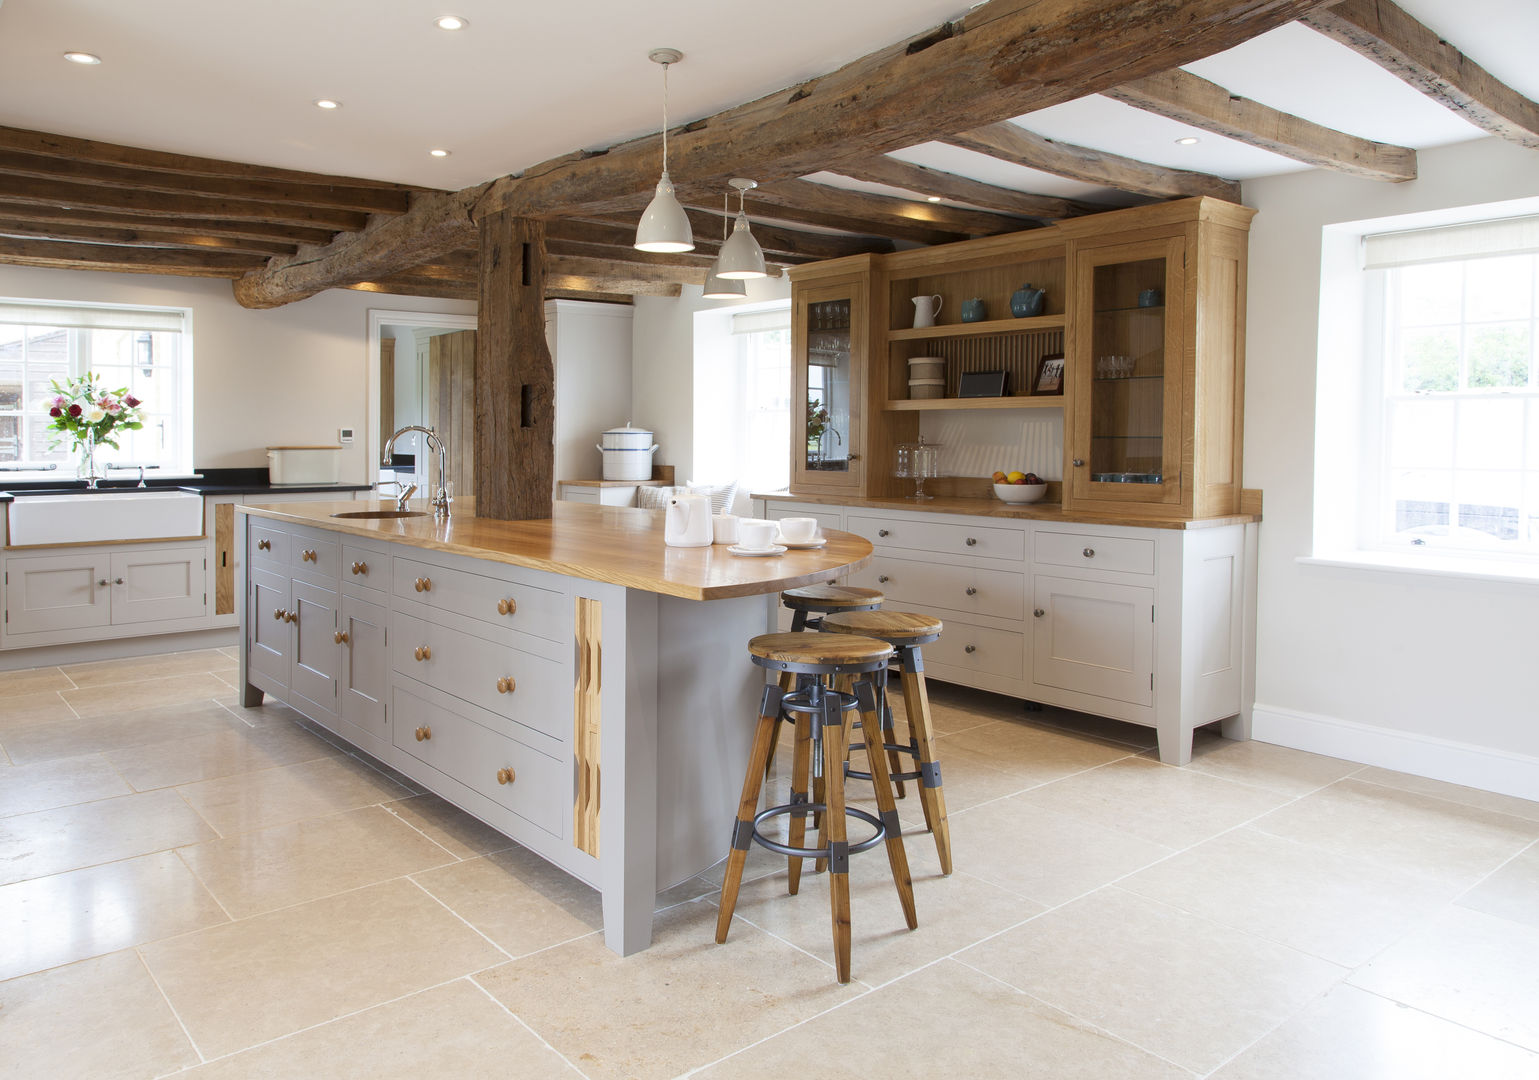 Old English - Bespoke kitchen project in Cambridgeshire Baker & Baker Rustikale Küchen dresser,kitchen island,seating,tile flooring,beams,lighting